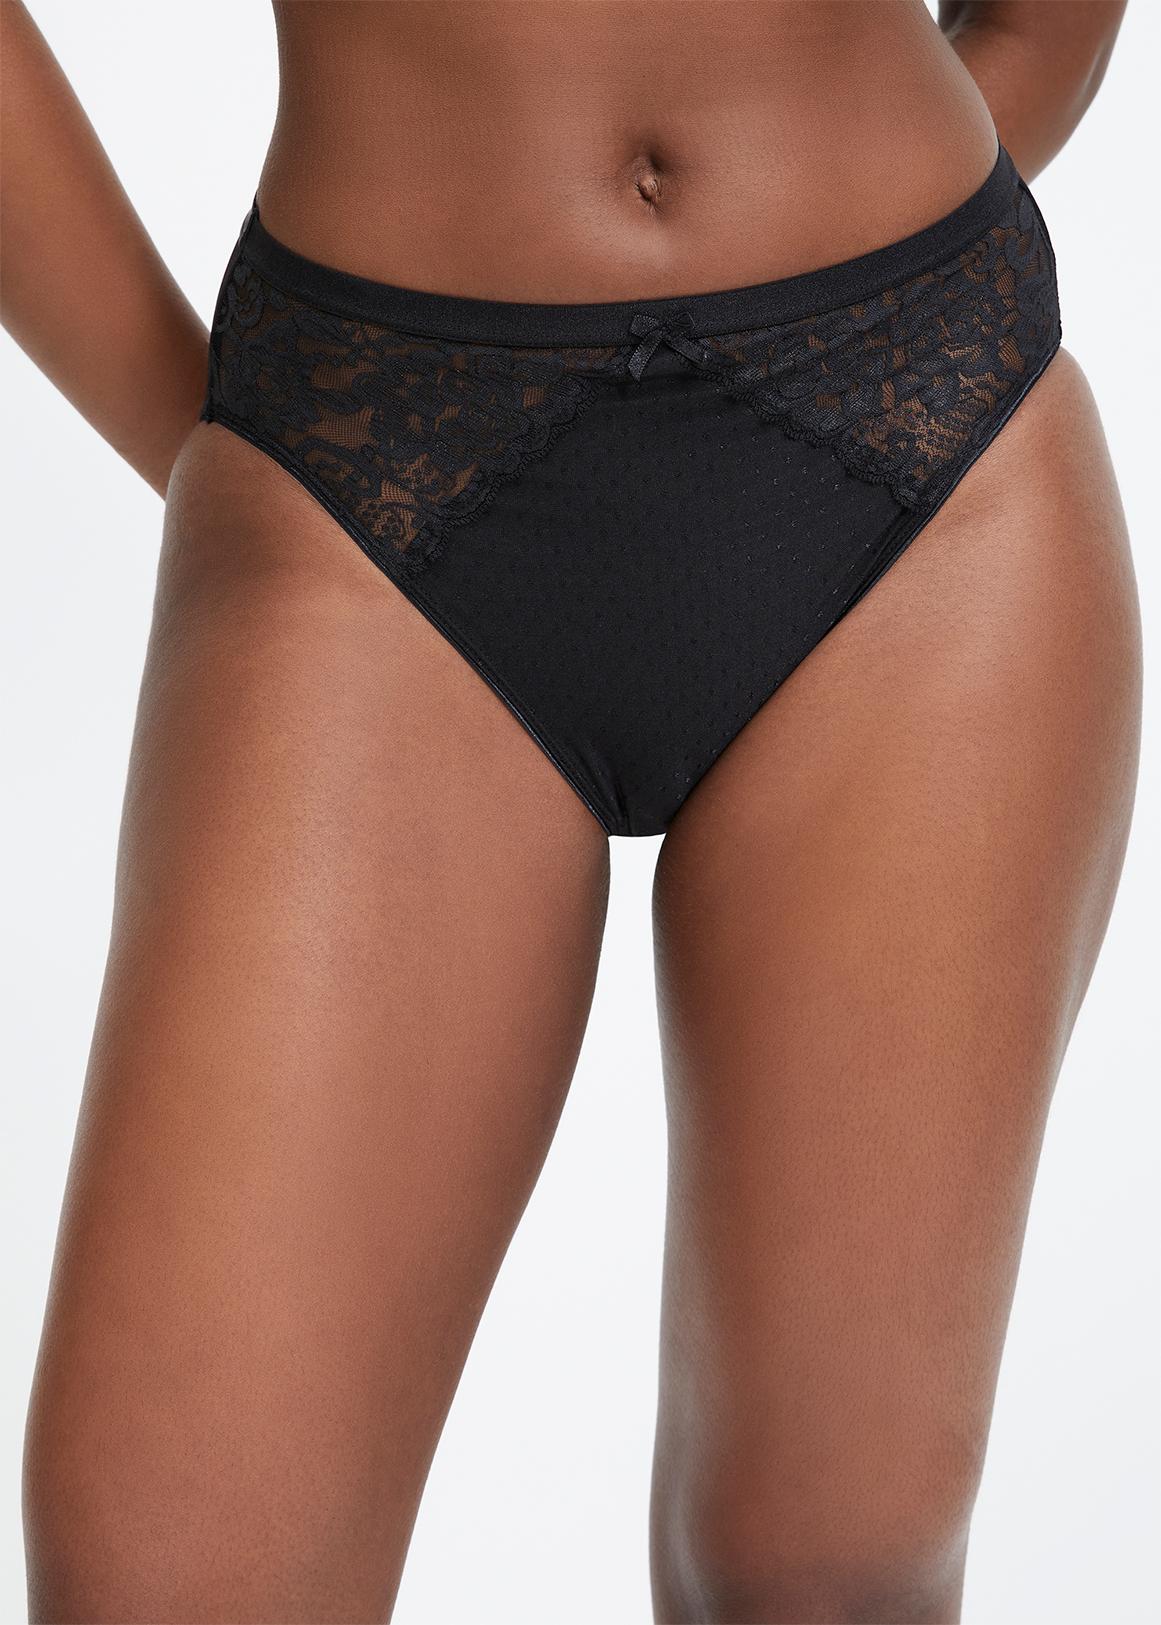 Women's Underwear with Secret Pocket Panties, 2 Packs (Black)